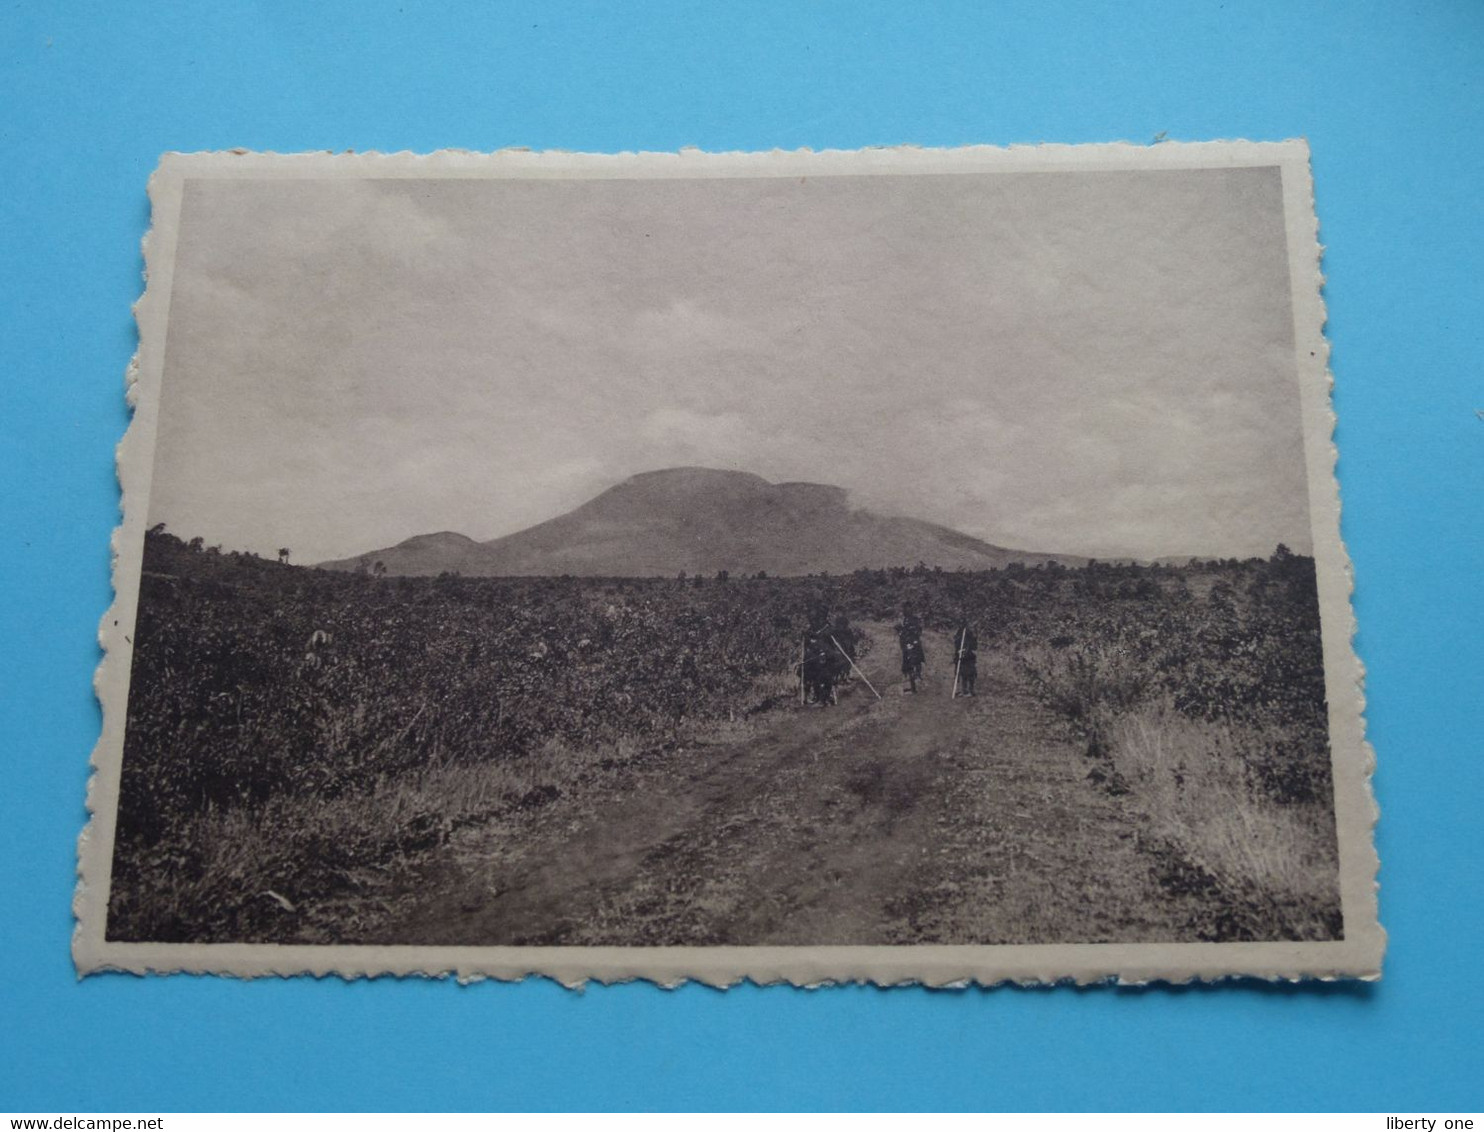 PARC NATIONAL ALBERT Volcan Nyamuragira Congo Belge - Série XIV ( Carnet De 10 Cartes ) Anno 19?? ( See / Voir Foto ) ! - Lubumbashi